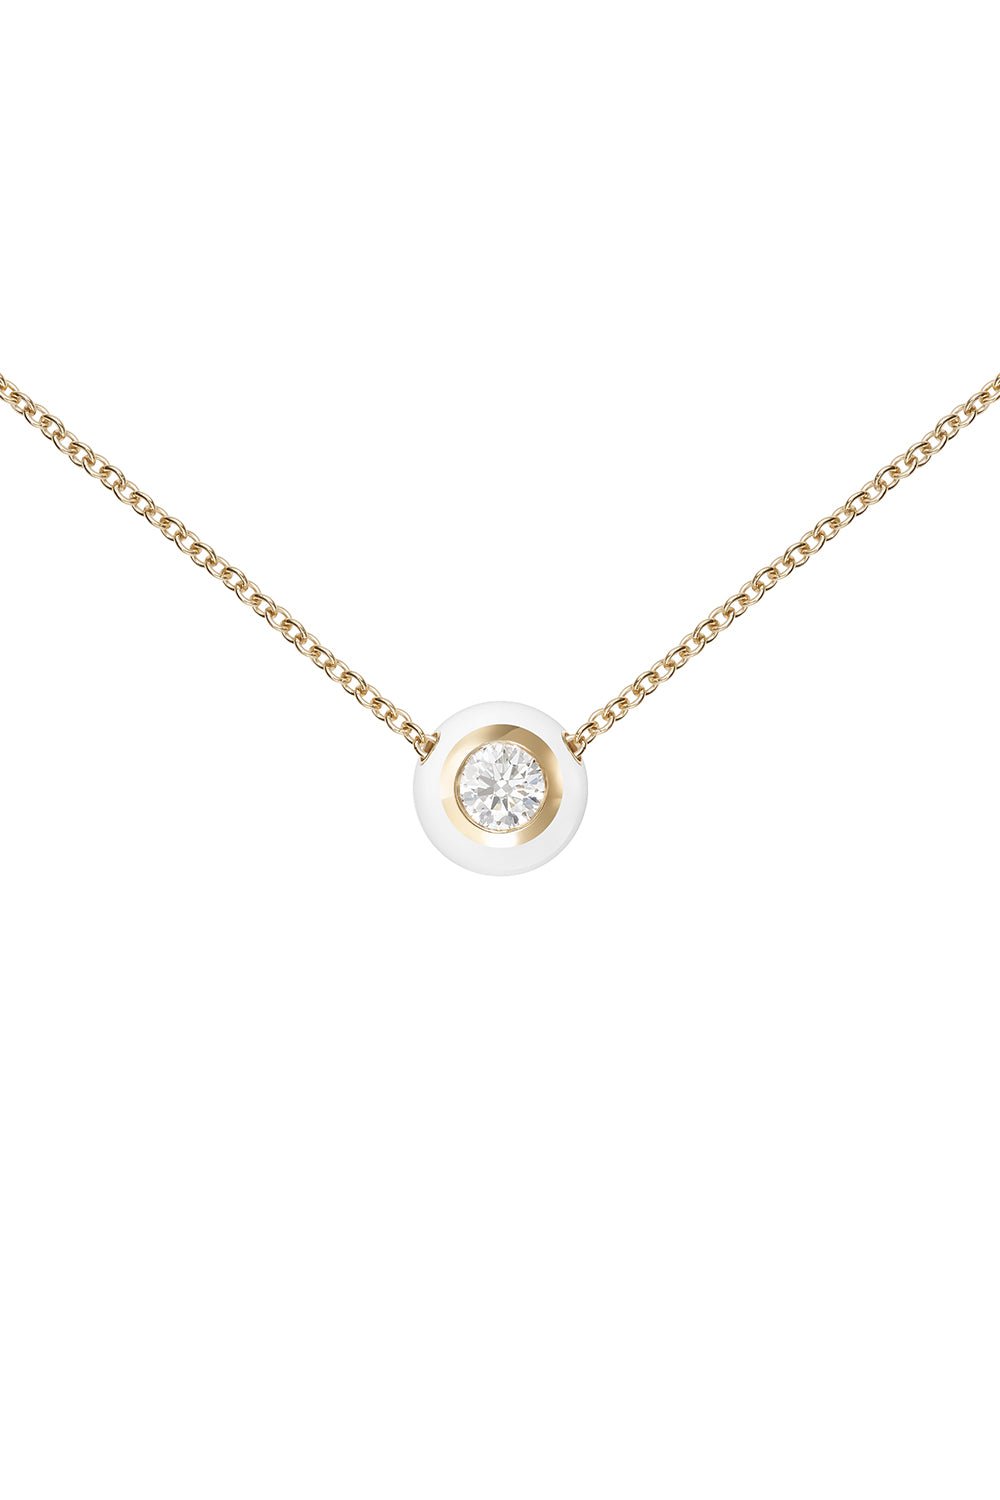 MELISSA KAYE-Large White Audrey Pendant Necklace-YELLOW GOLD